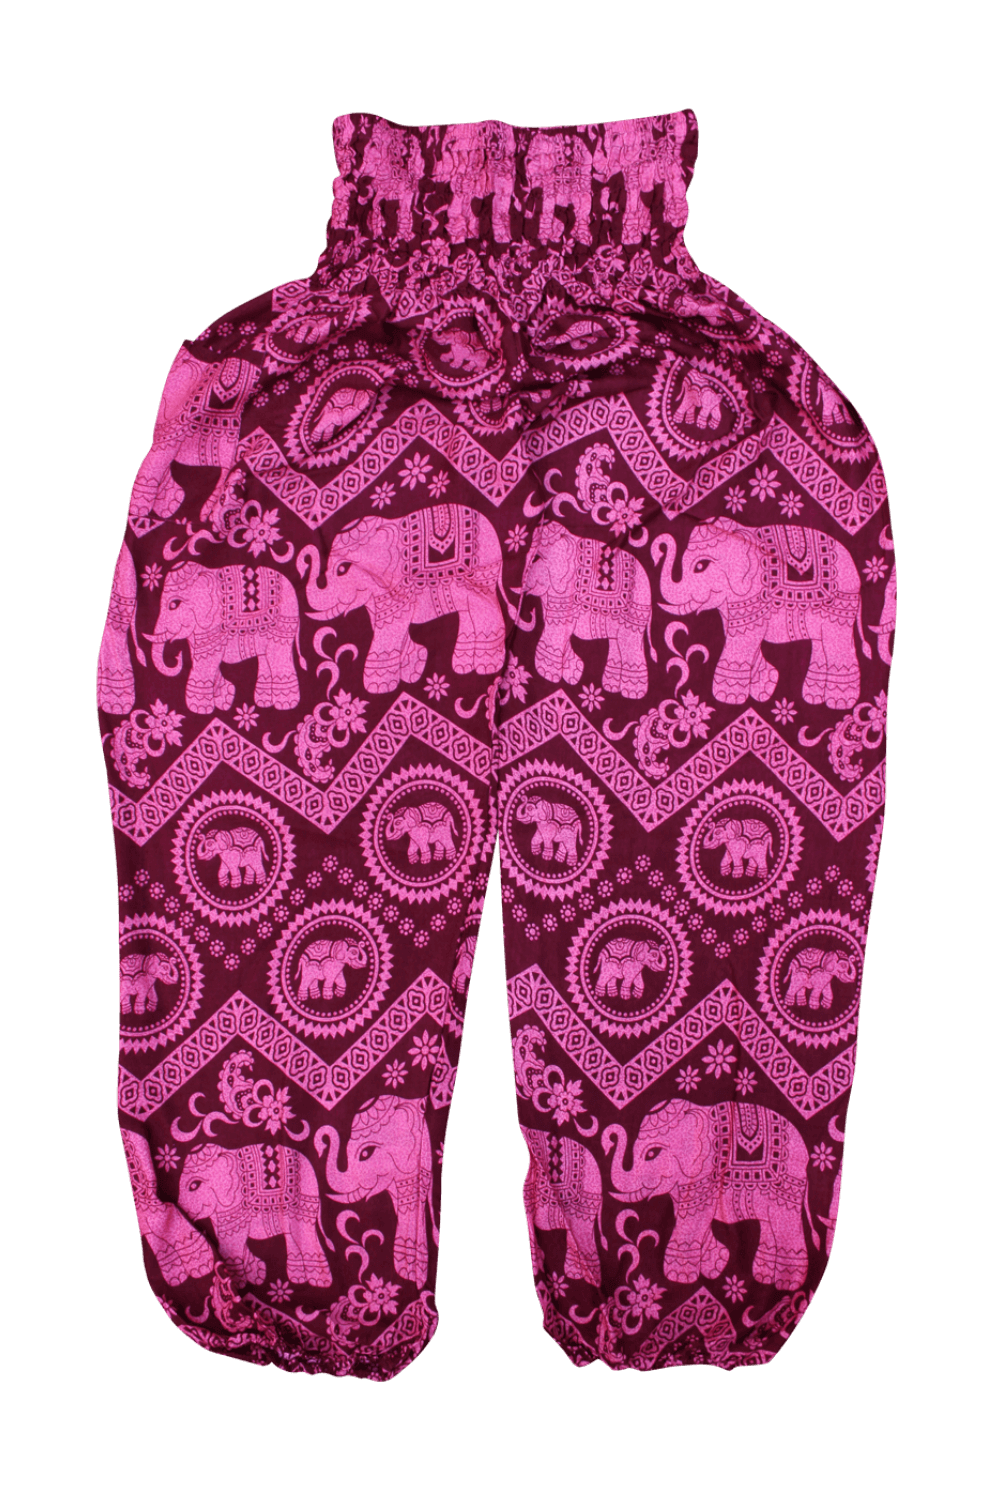 Amitabha Elephant Harem Pants from Bohemian Island